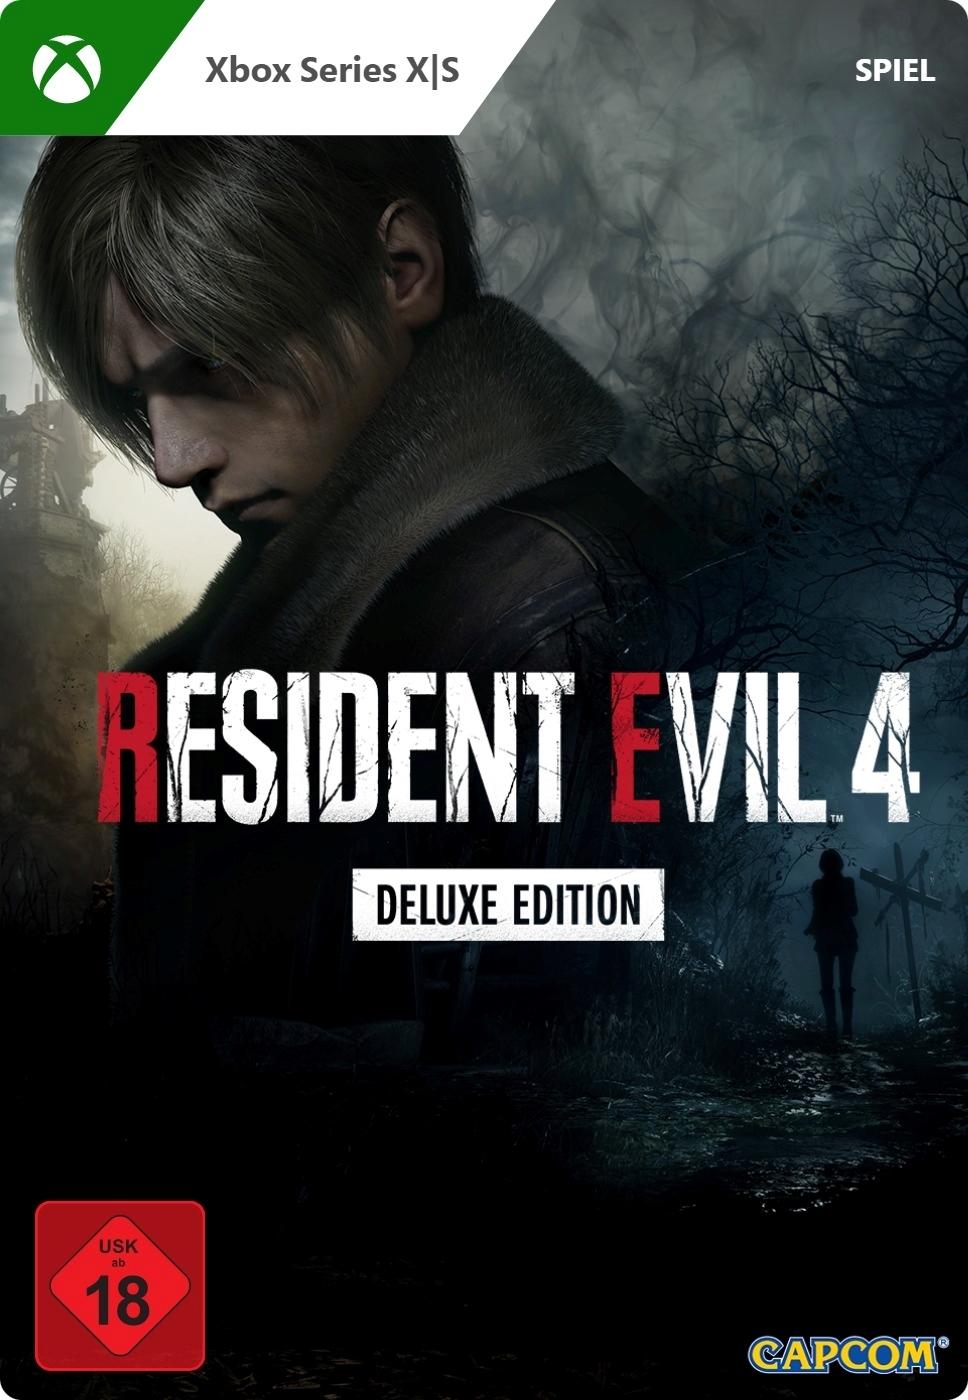 Resident Evil 4 Deluxe Edition - Xbox Series X - Game | G3Q-01515 (d1ae070f-e314-954a-be24-da72c49d4ac9)